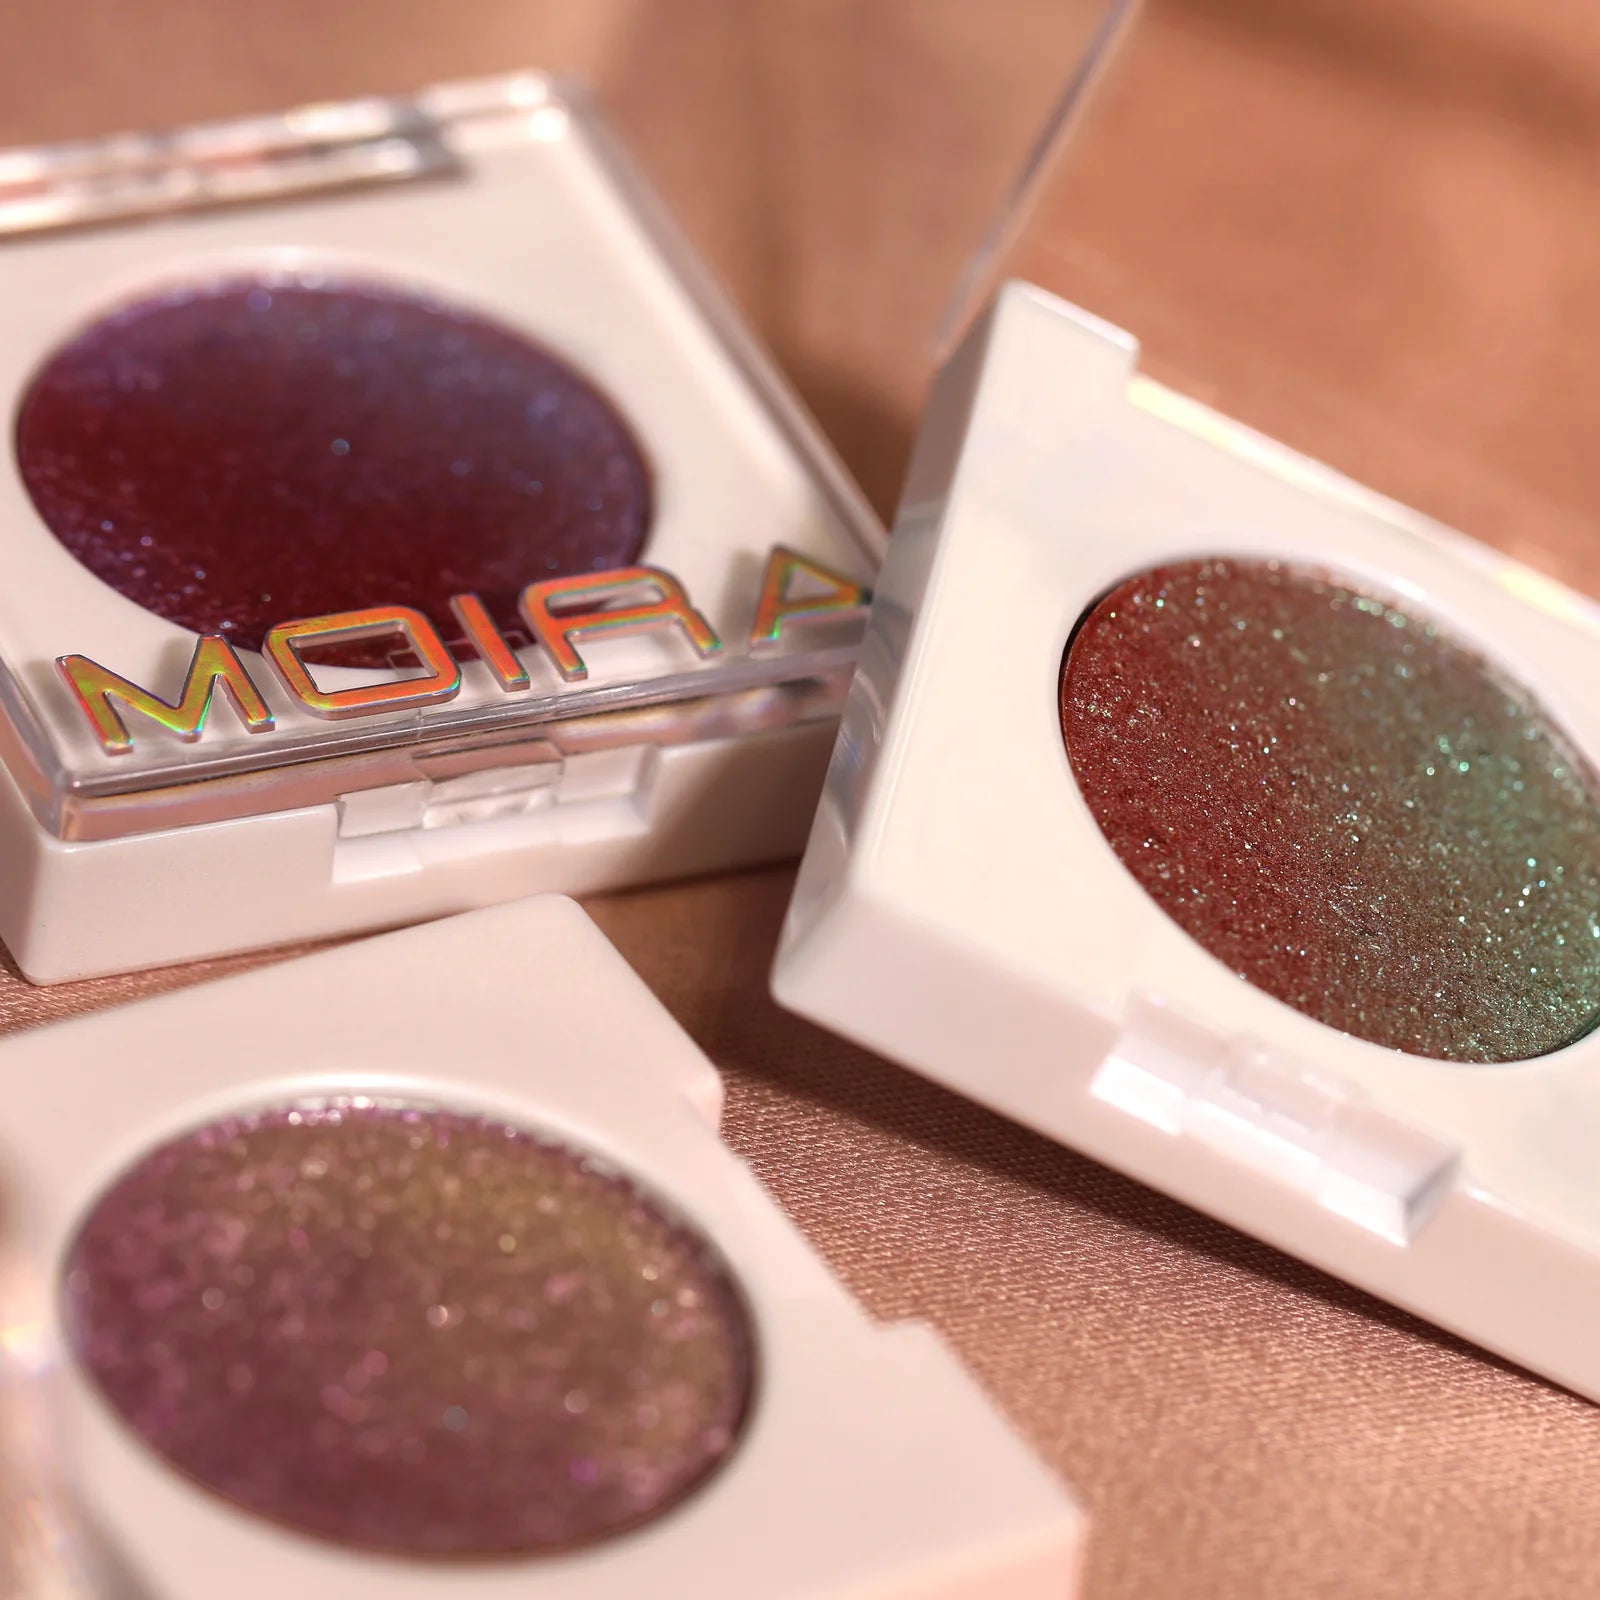 Moira Chroma Light Shadows palette, luminous summer makeup, cruelty-free, Nikkie Tutorials approved on TikTok, Urban Decay dupe